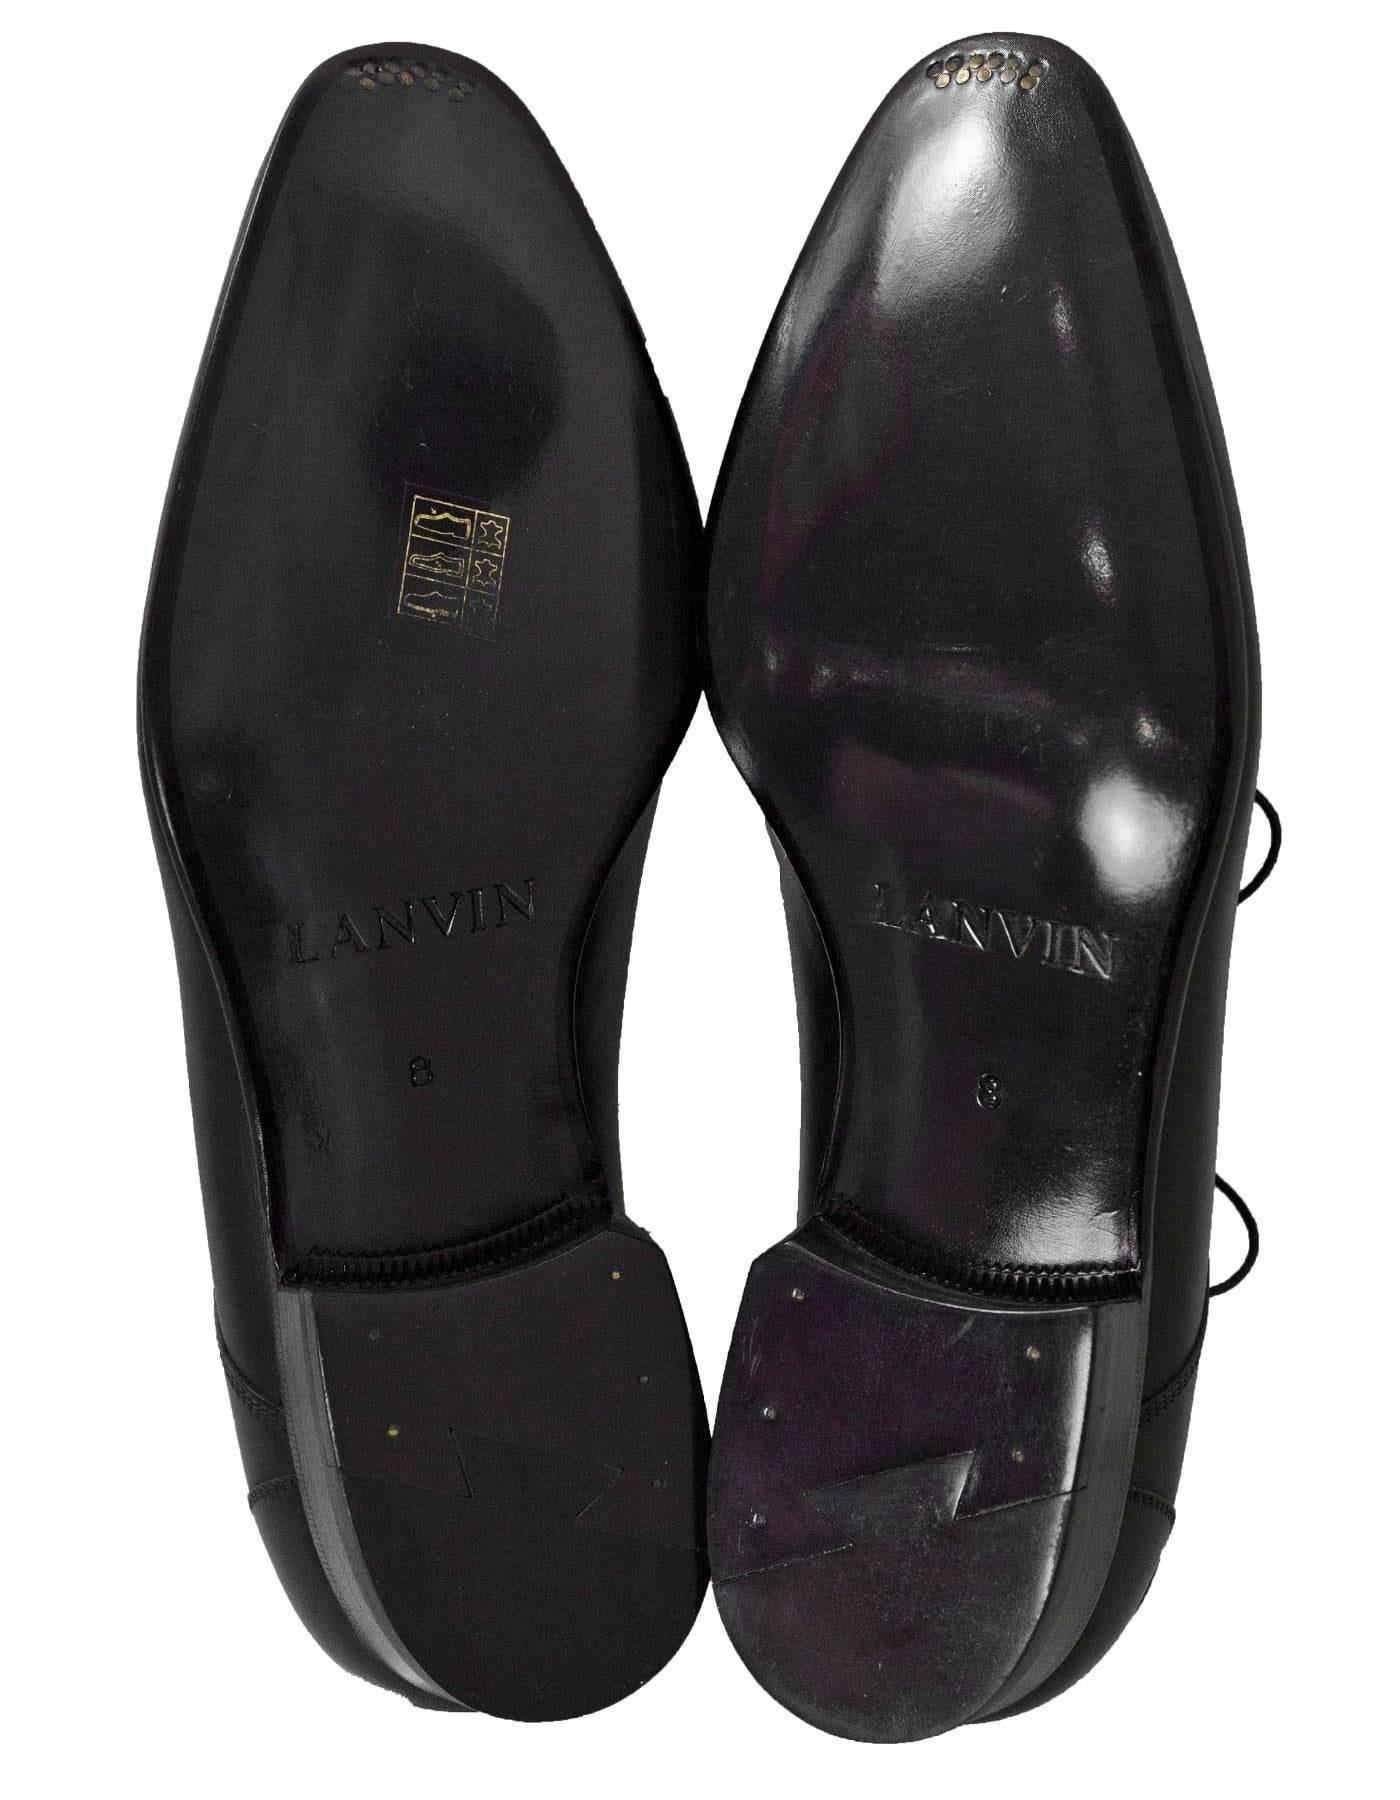 Lanvin Men's Black Leather Oxford Shoes Sz 8 NIB 1